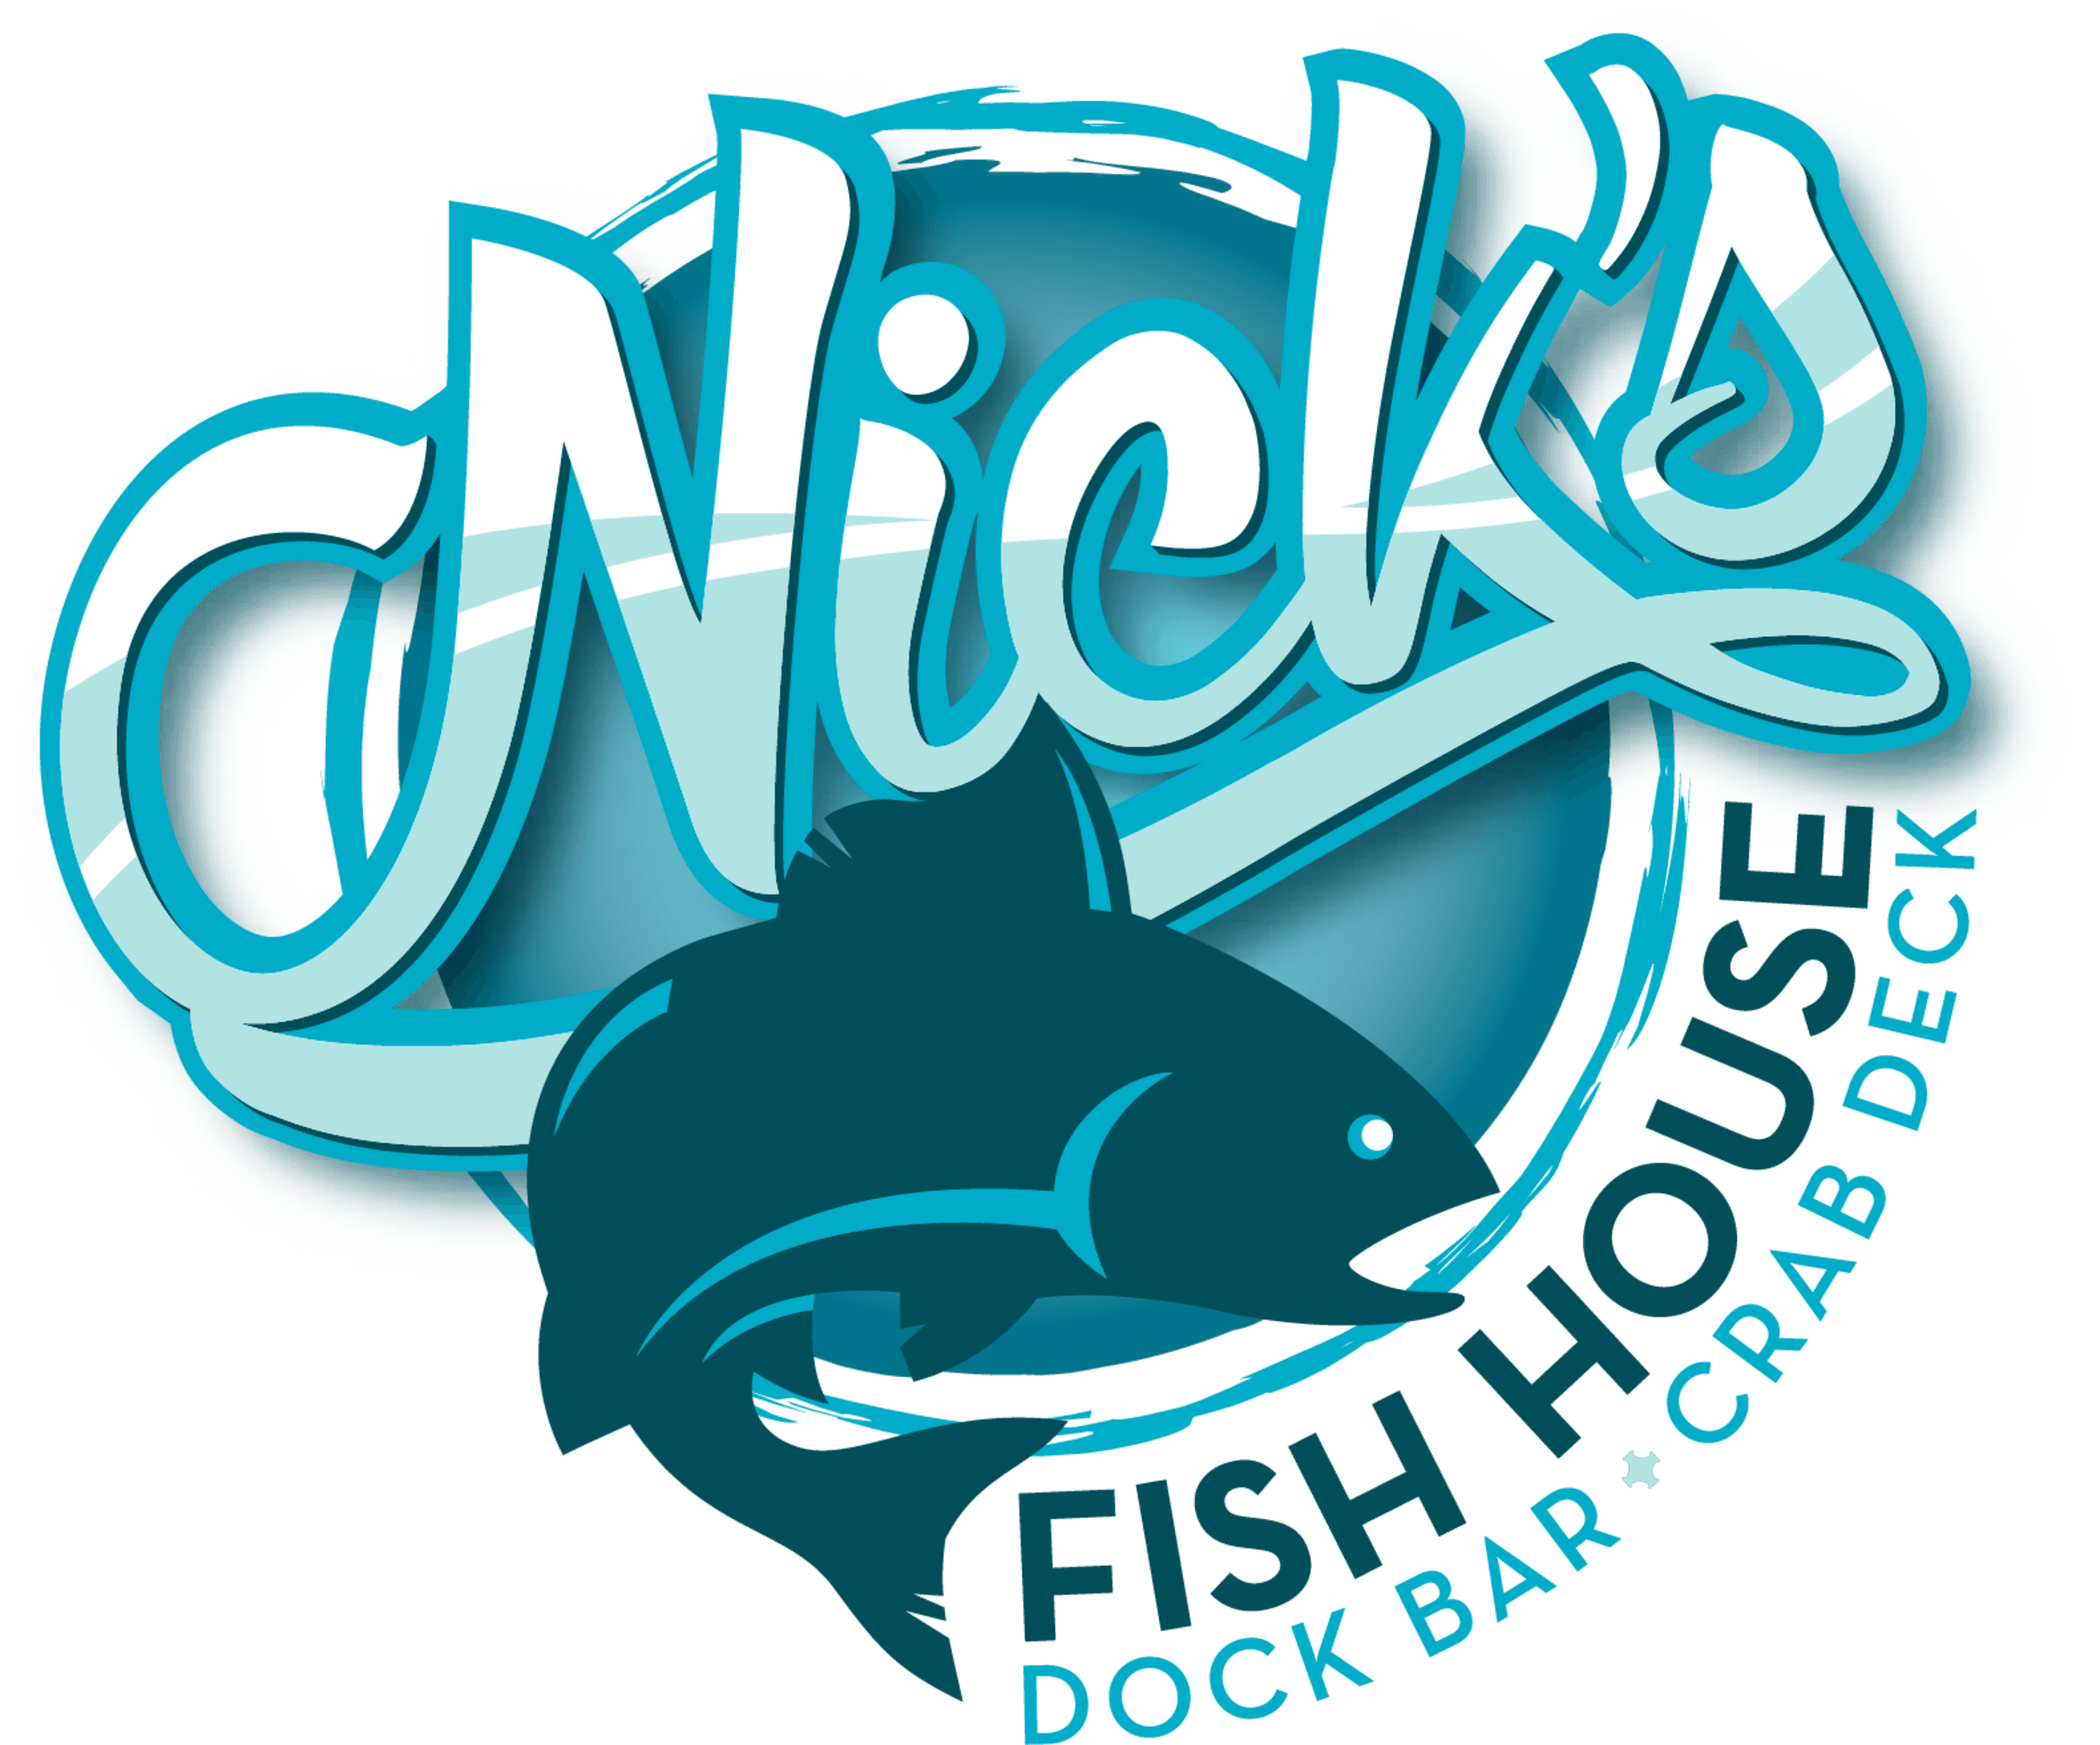 NICK'S FISH HOUSE